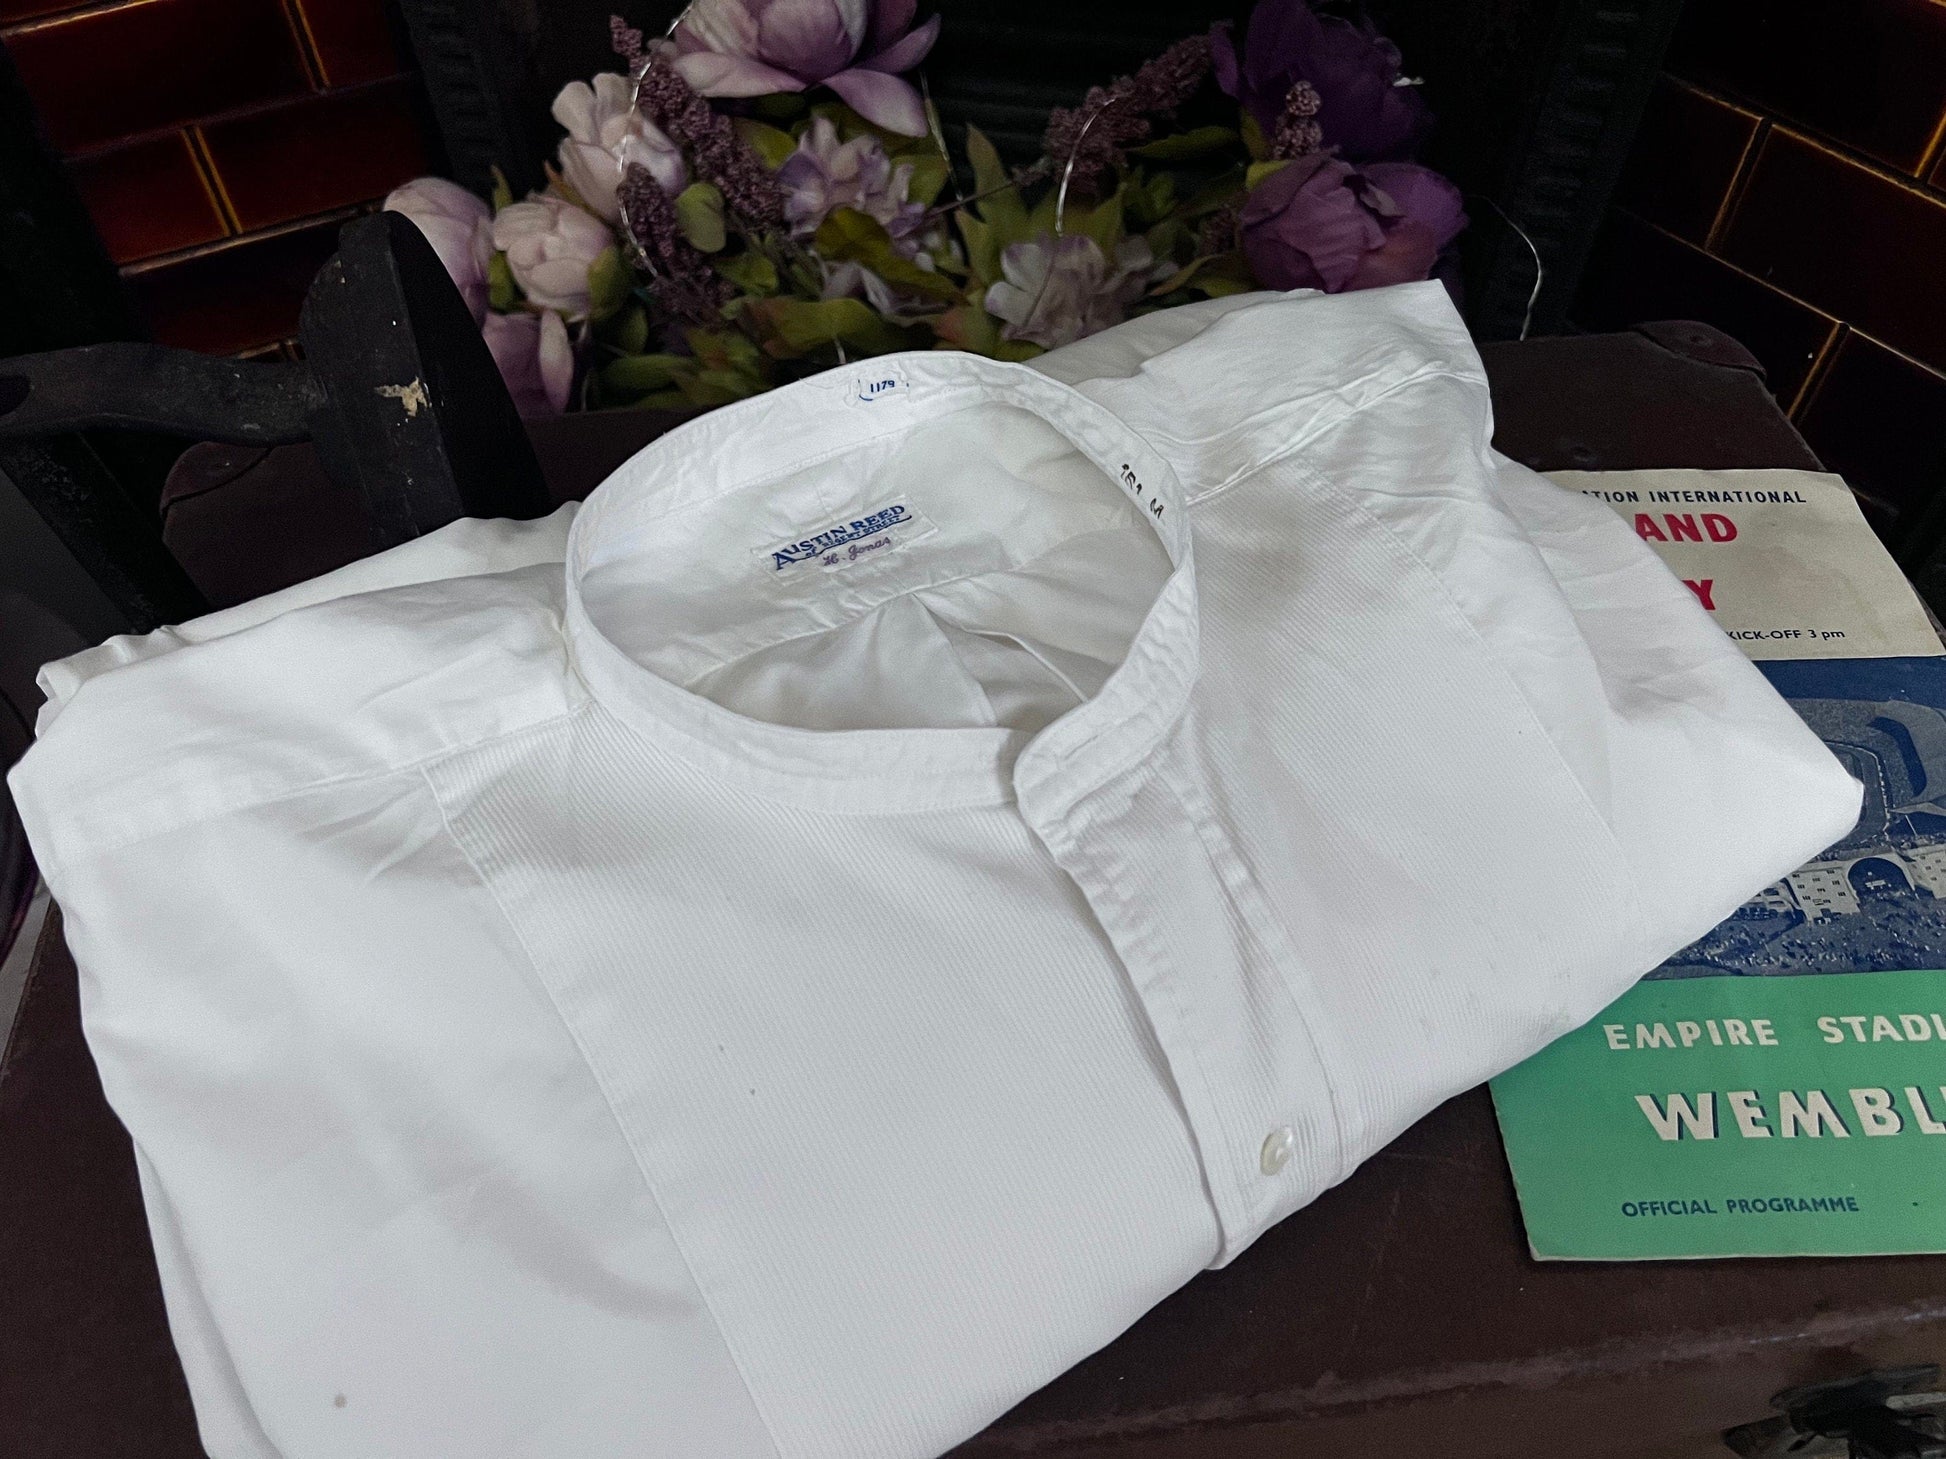 Vintage 1960s Dress Shirt Austin Reed, Bespoke White Shirt, Pleated,Tuxedo Shirt, Bib Front, vintage dress shirt, vintage shirt, men’s shirt